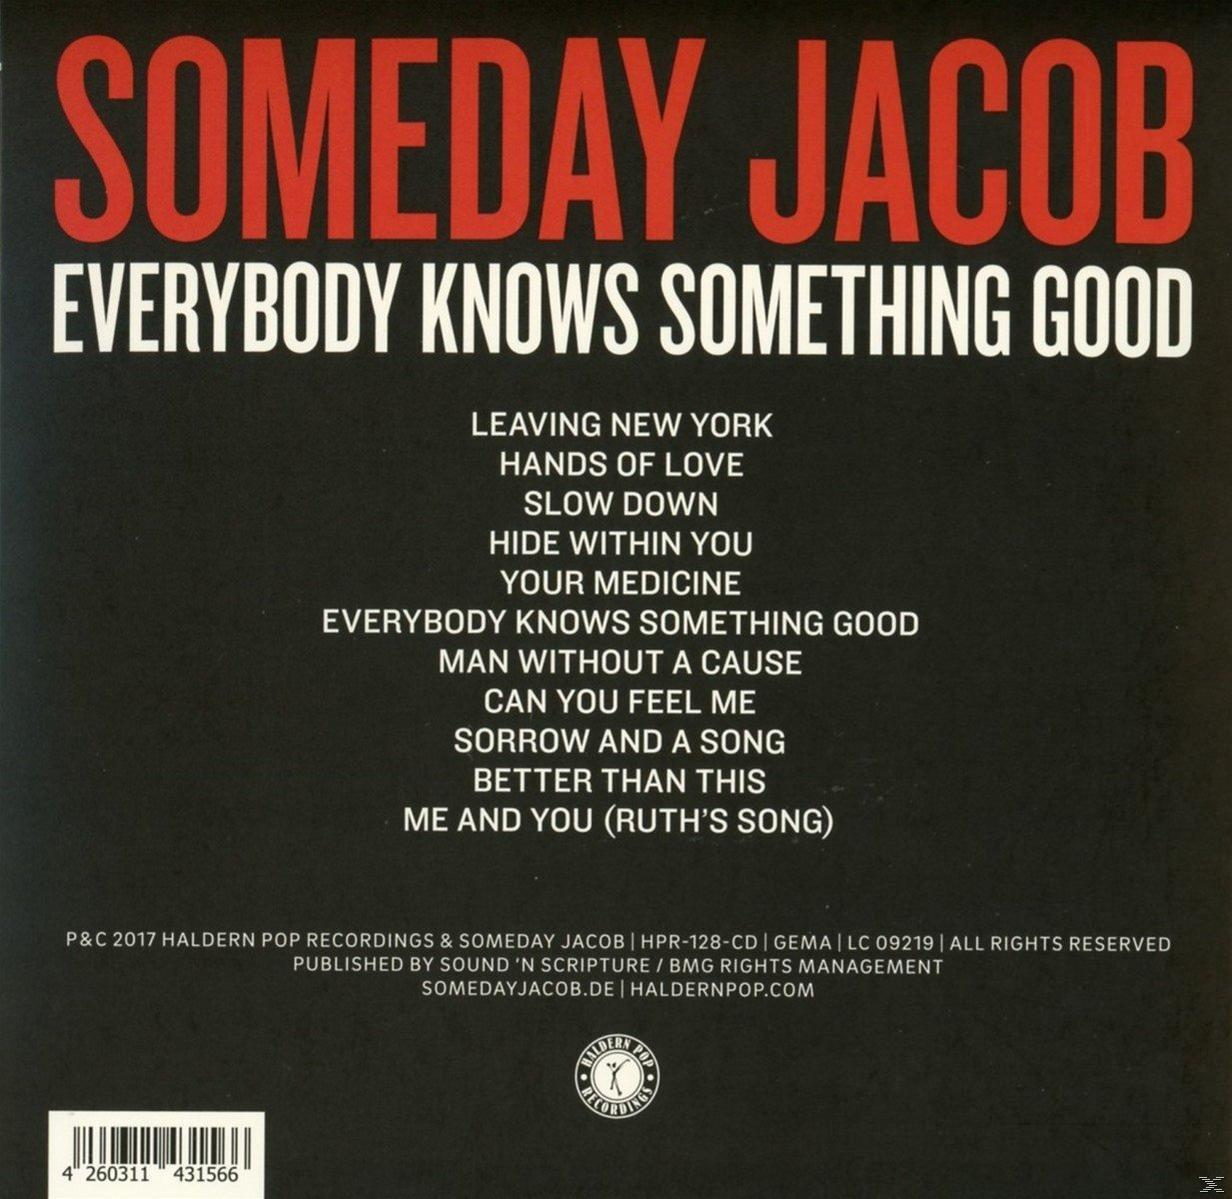 (CD) - Good Someday Something Jacob Knows - Everybody